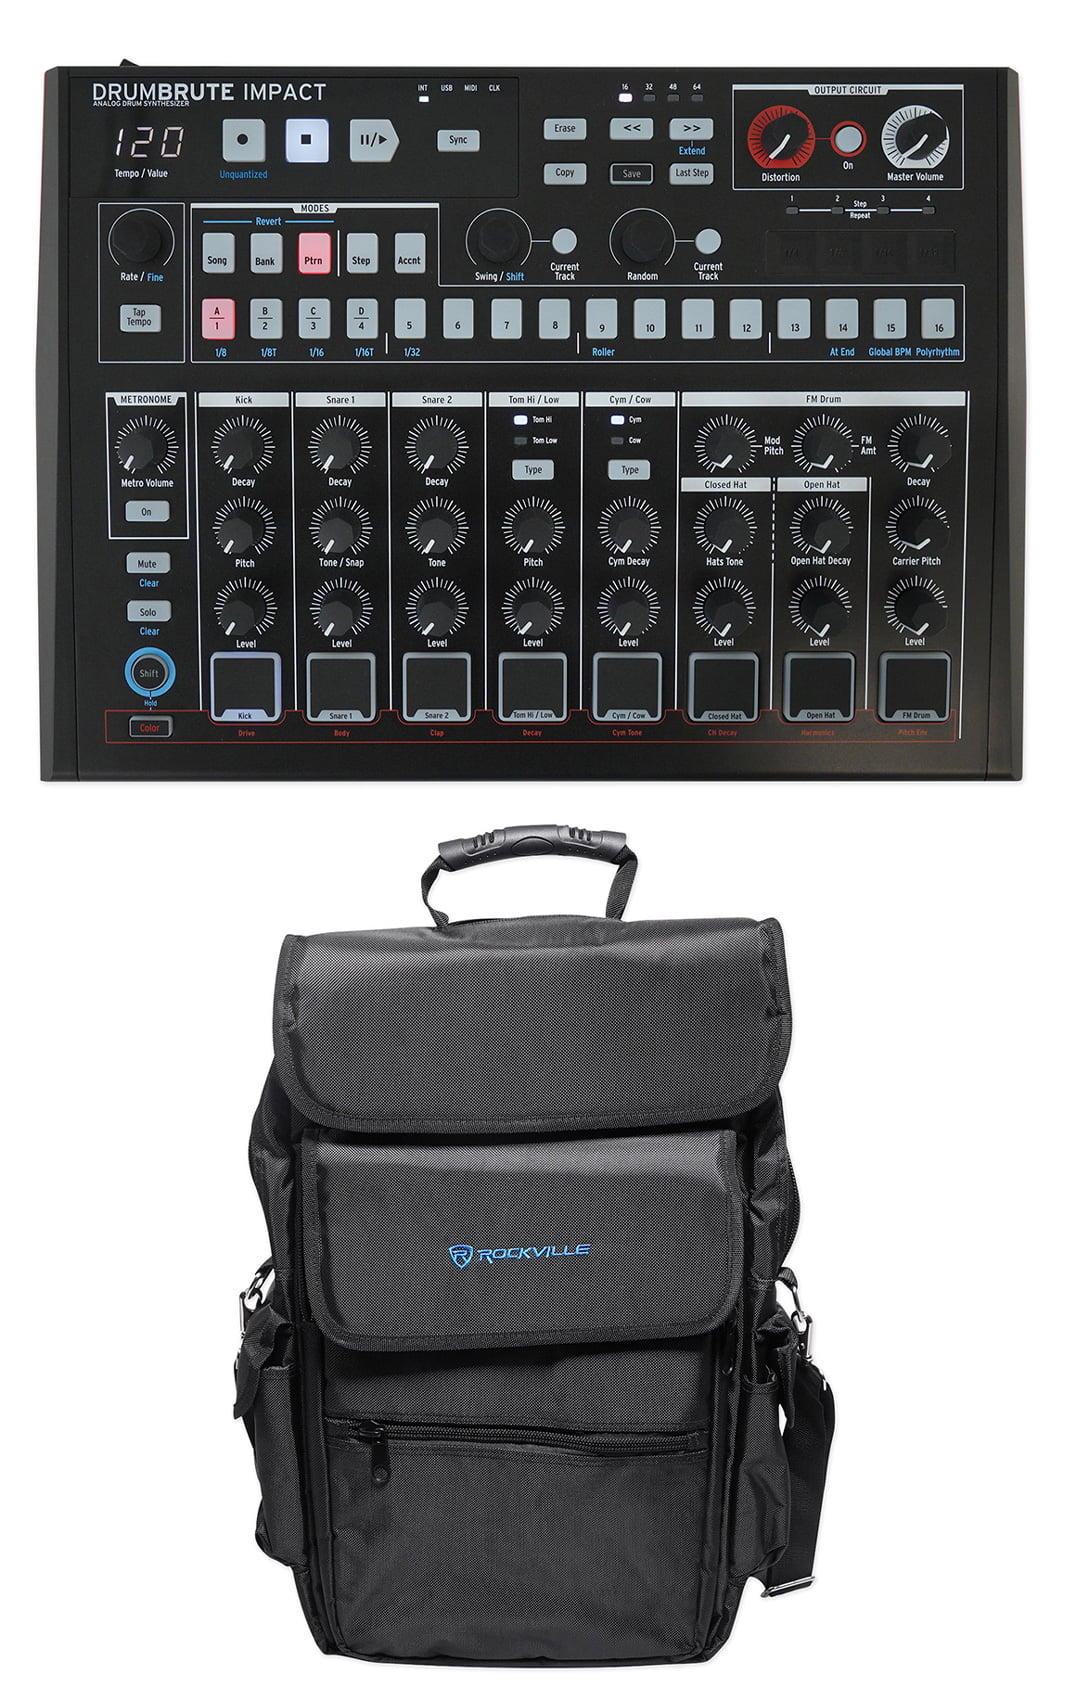 Arturia Arturia Drumbrute Impact NOIR USB MIDI Analog Drum Synthesizer Machine+Backpack 